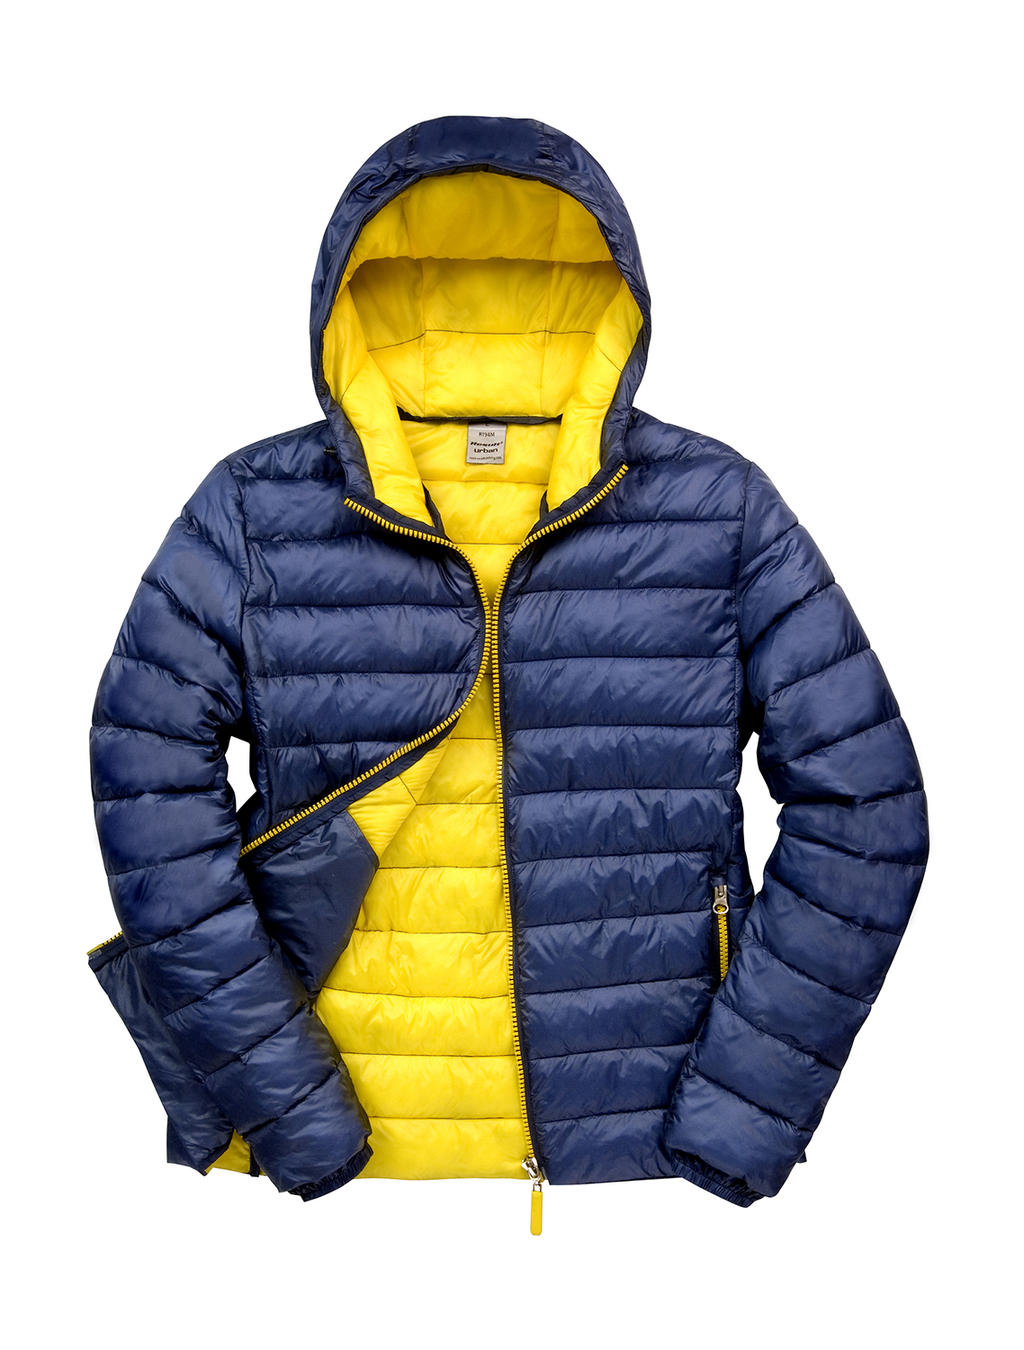 Pánská Snow Bird bunda s kapucí Velikost: XL, Barva: Navy/Yellow